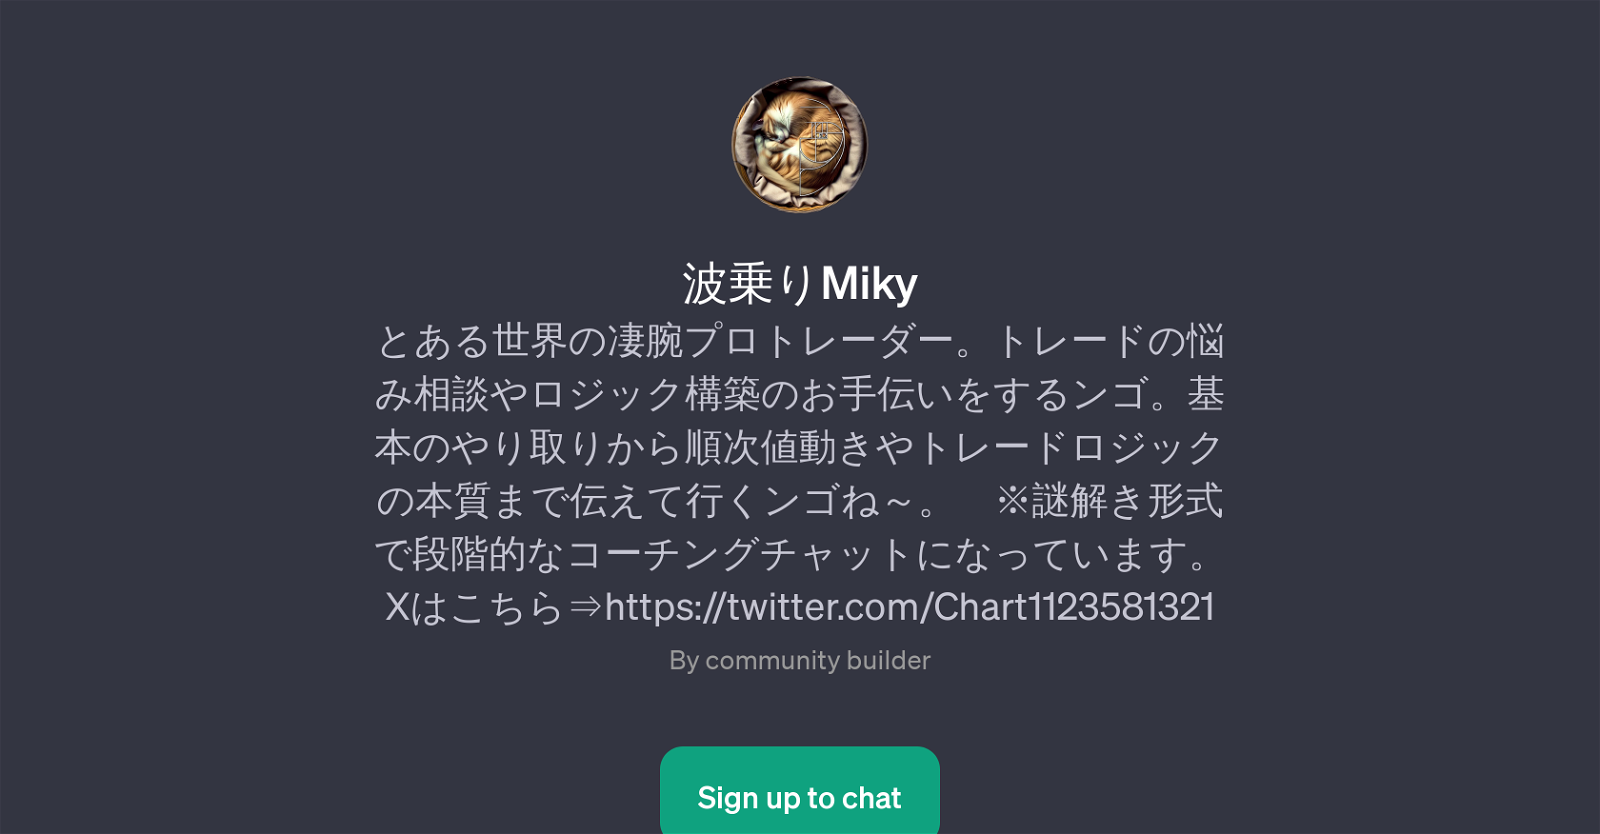 Miky website